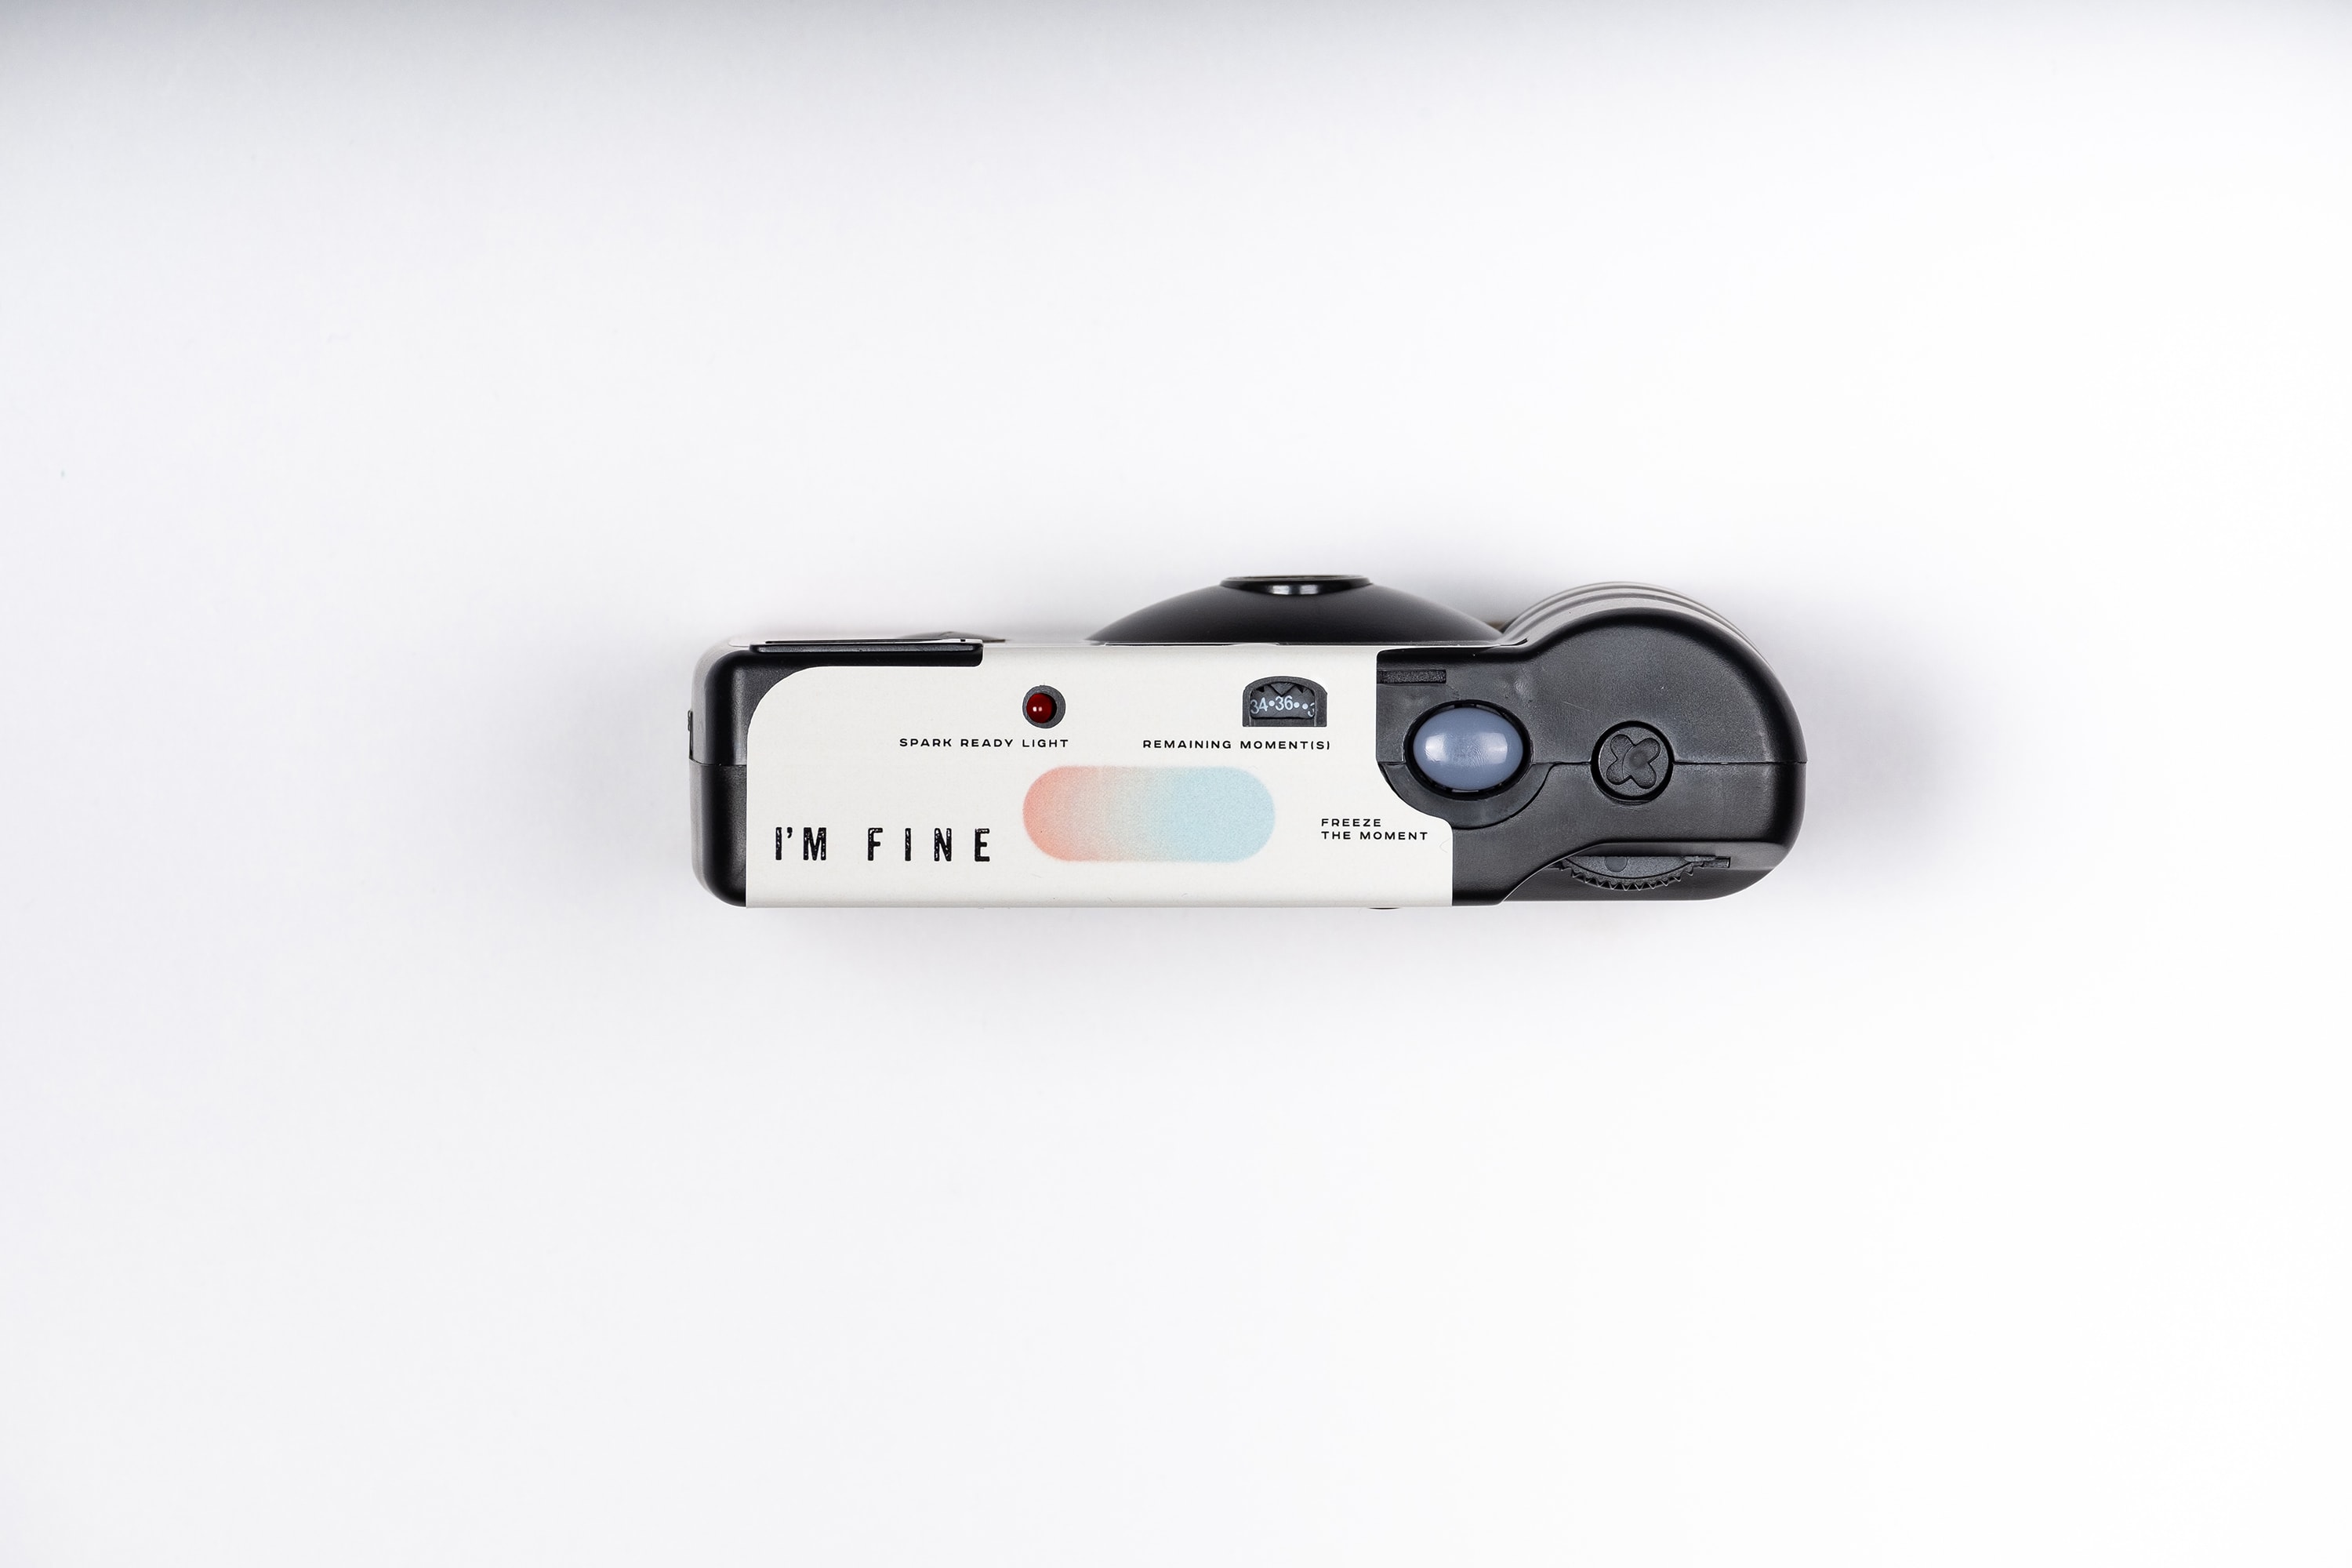 NINM Lab 推出「I'M FINE」即用即棄菲林相機